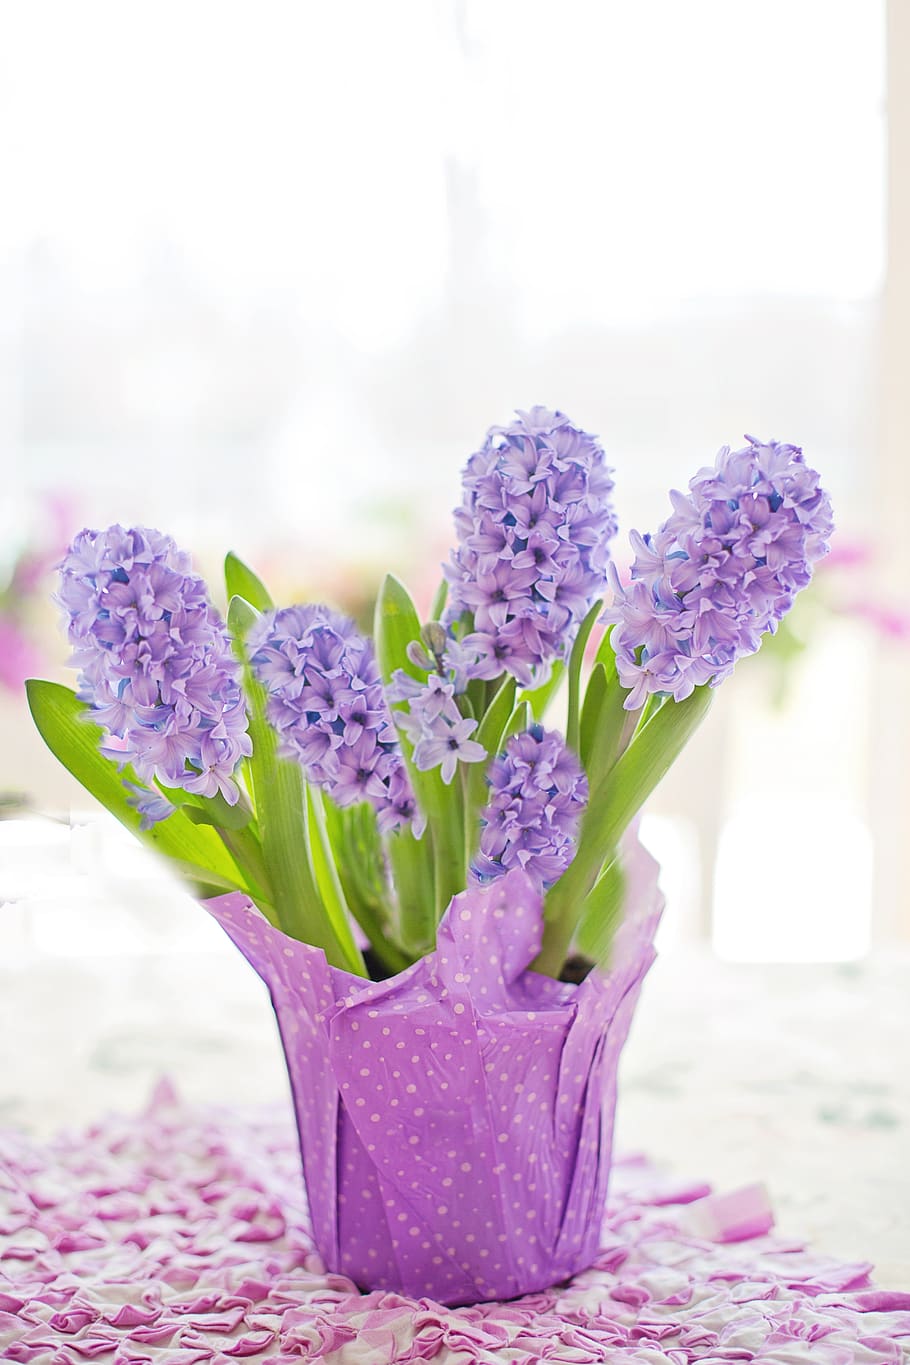 hyacinth, purple, pastel, spring, nature, flowers, blooms, blossoms, violet, vase